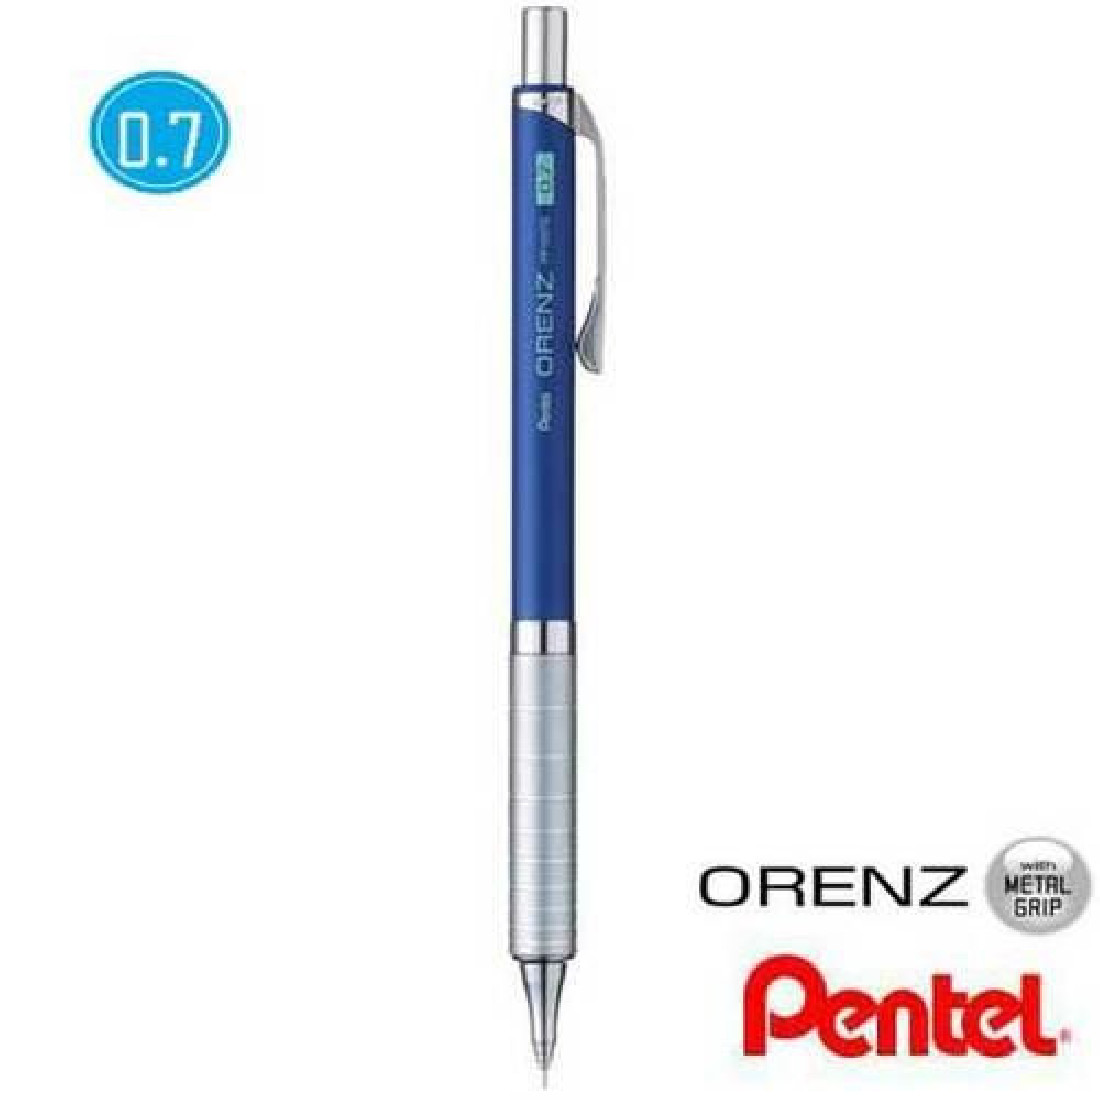 Pentel Orenz 0.7mm Blue mechanical pencil PP1007GC